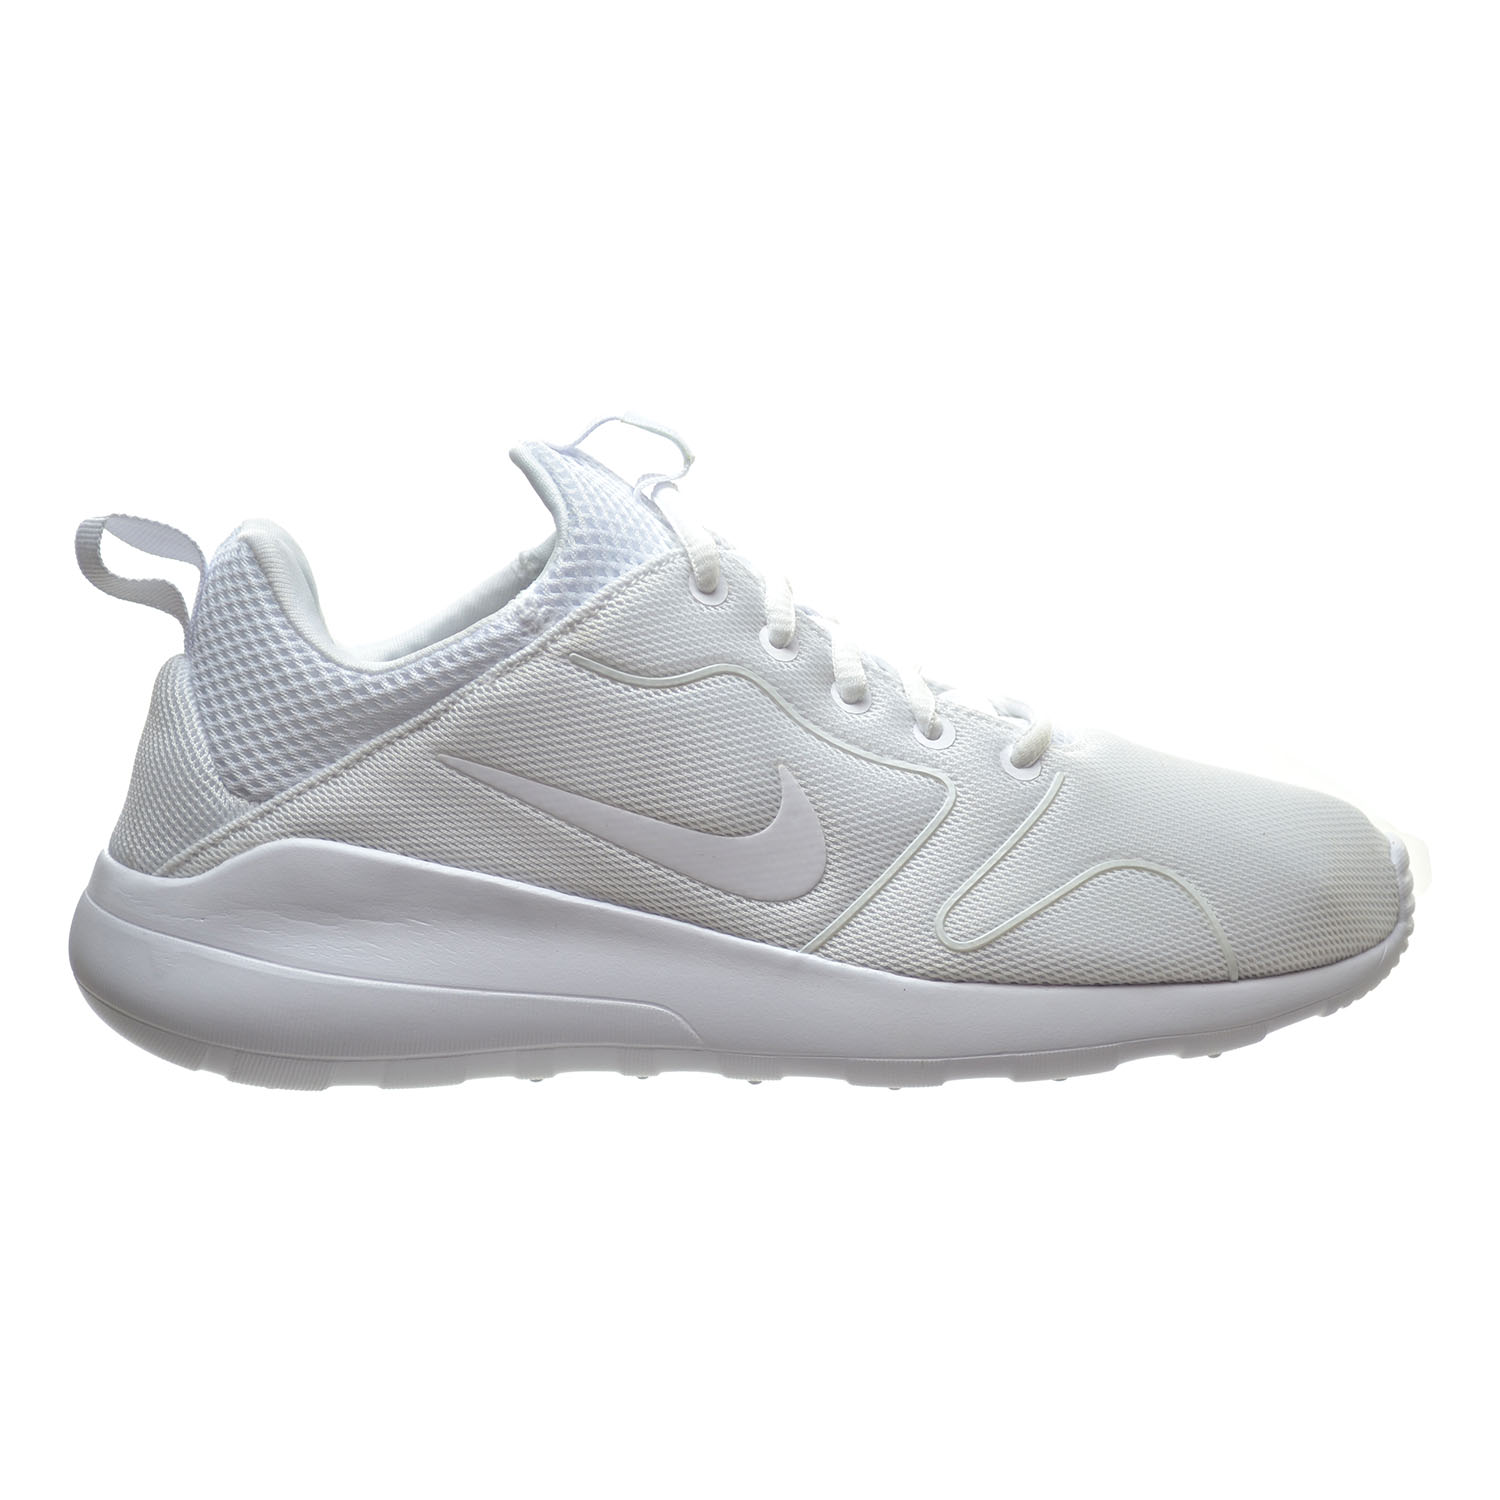 Spacious shot fluid Nike Kaishi 2.0 Men's Shoes White/White 833411-110 (9.5 D(M) US)